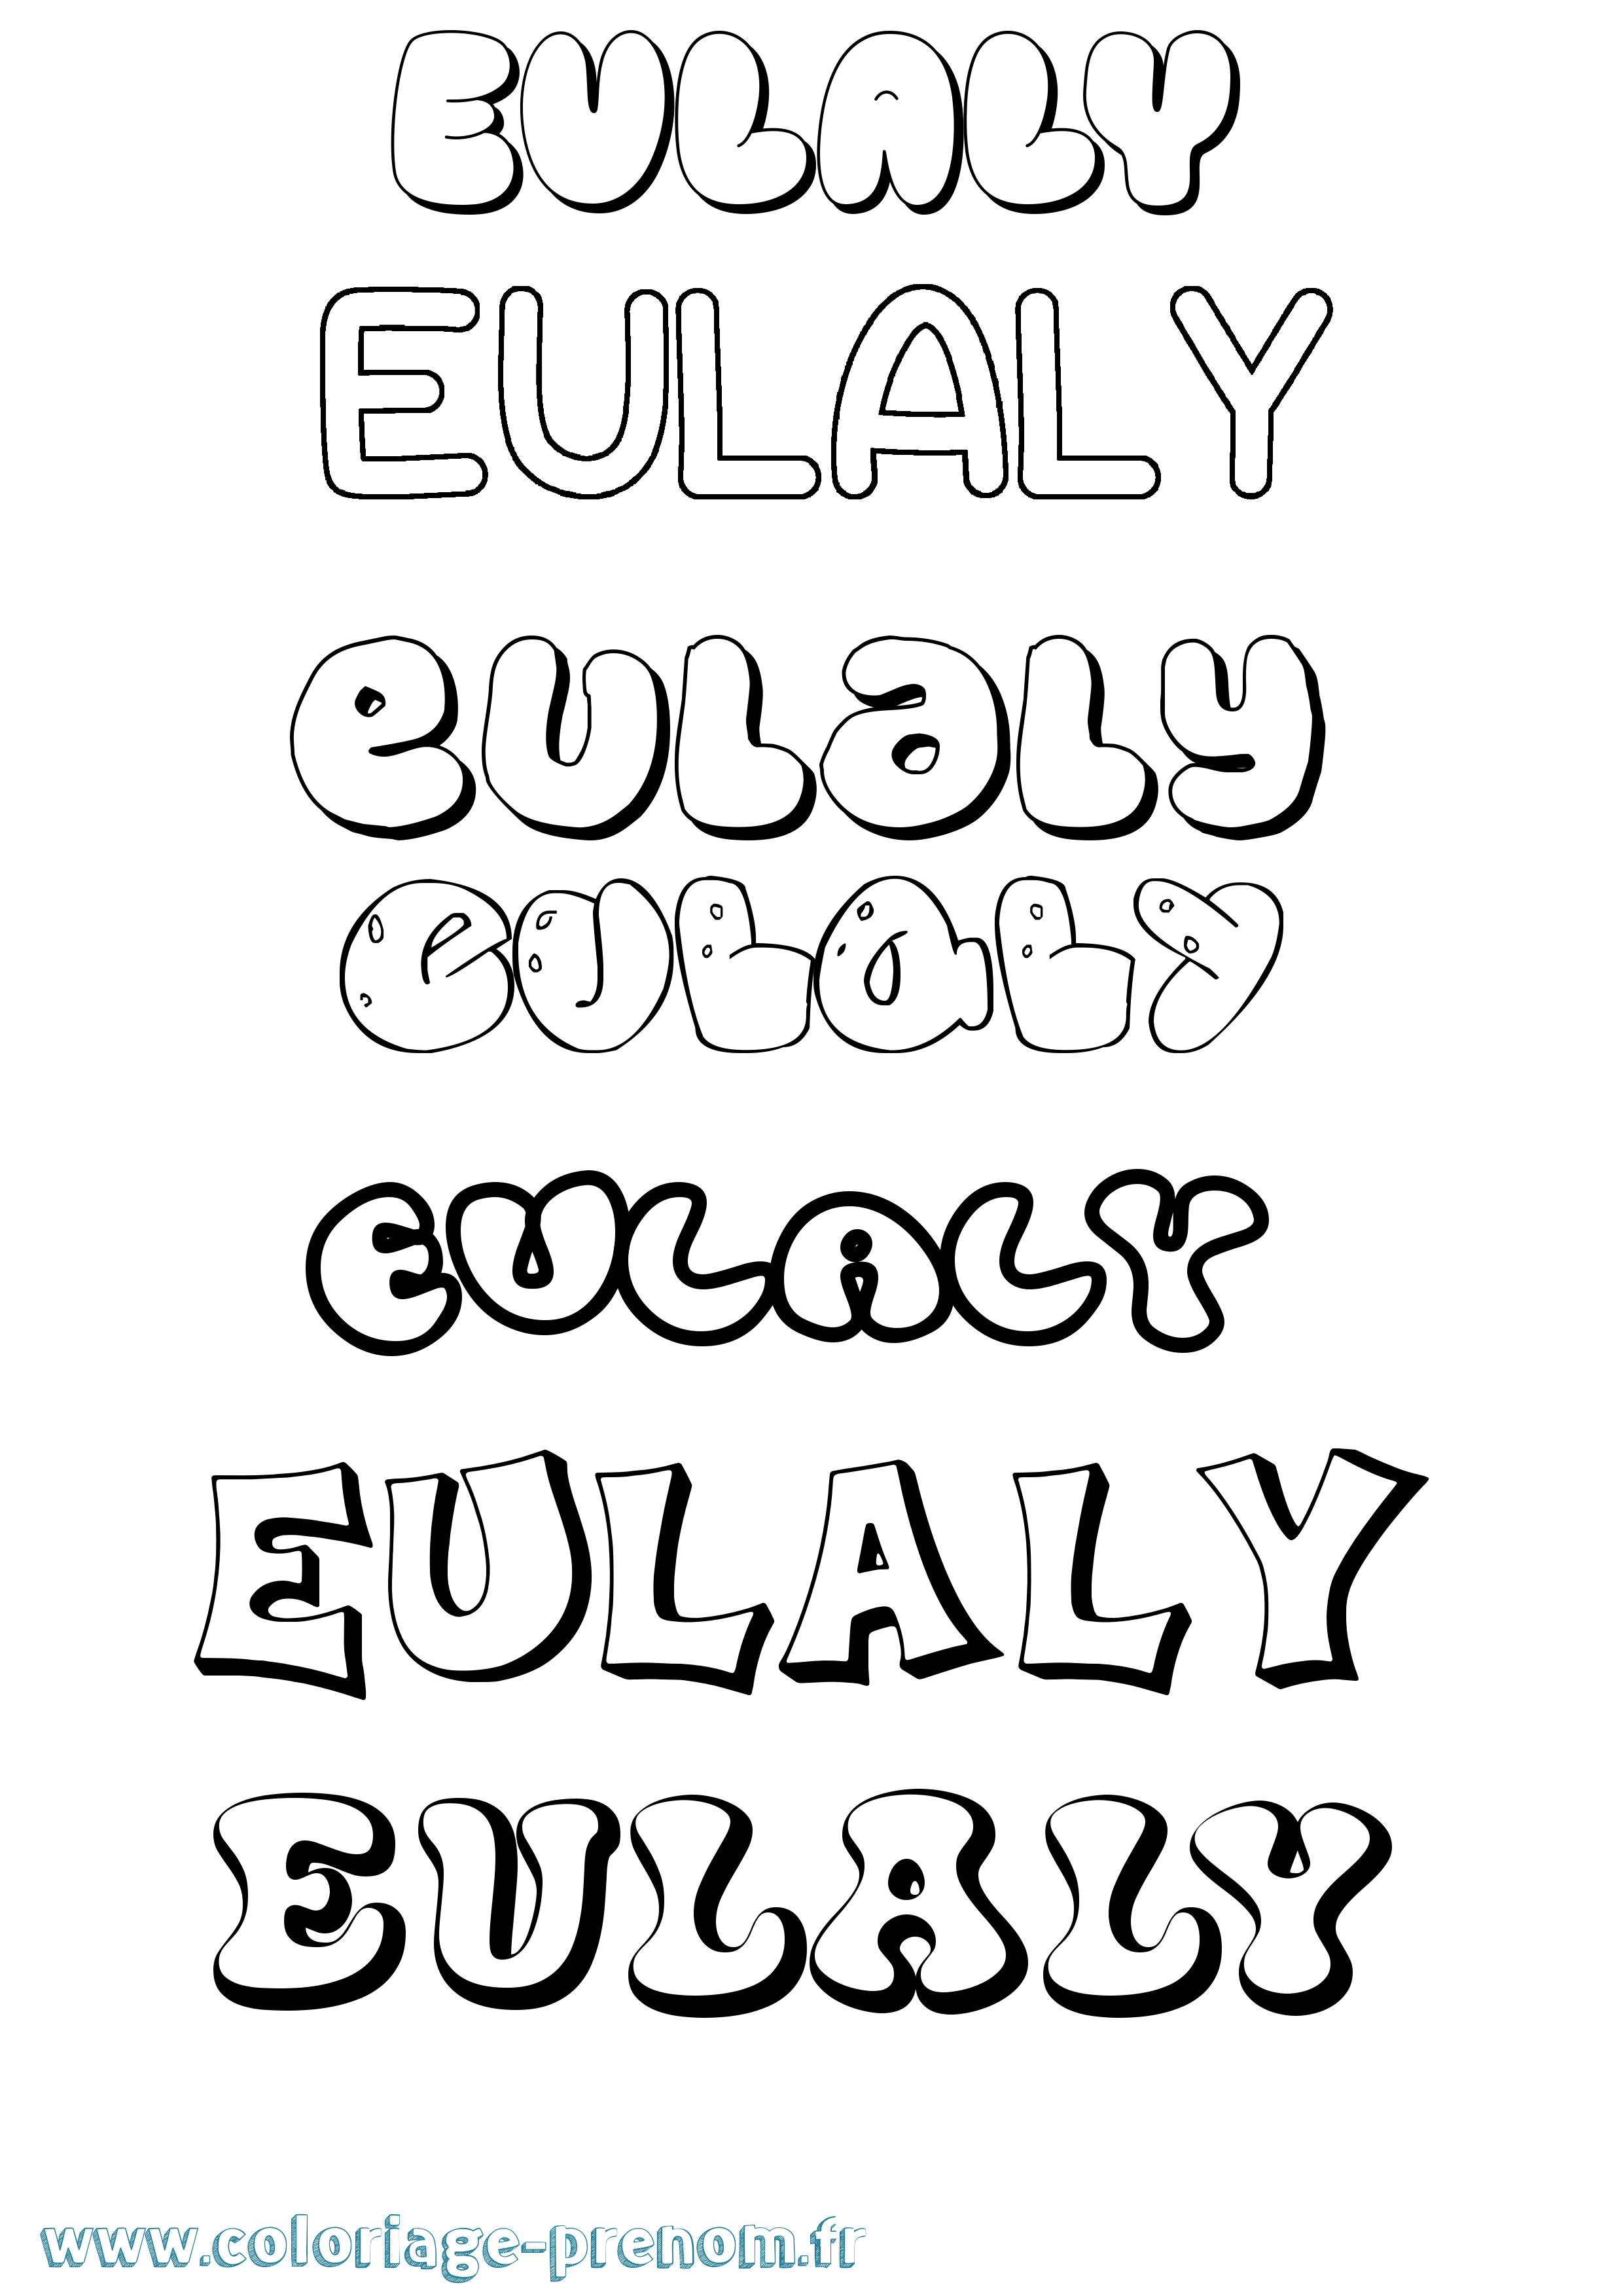 Coloriage prénom Eulaly Bubble